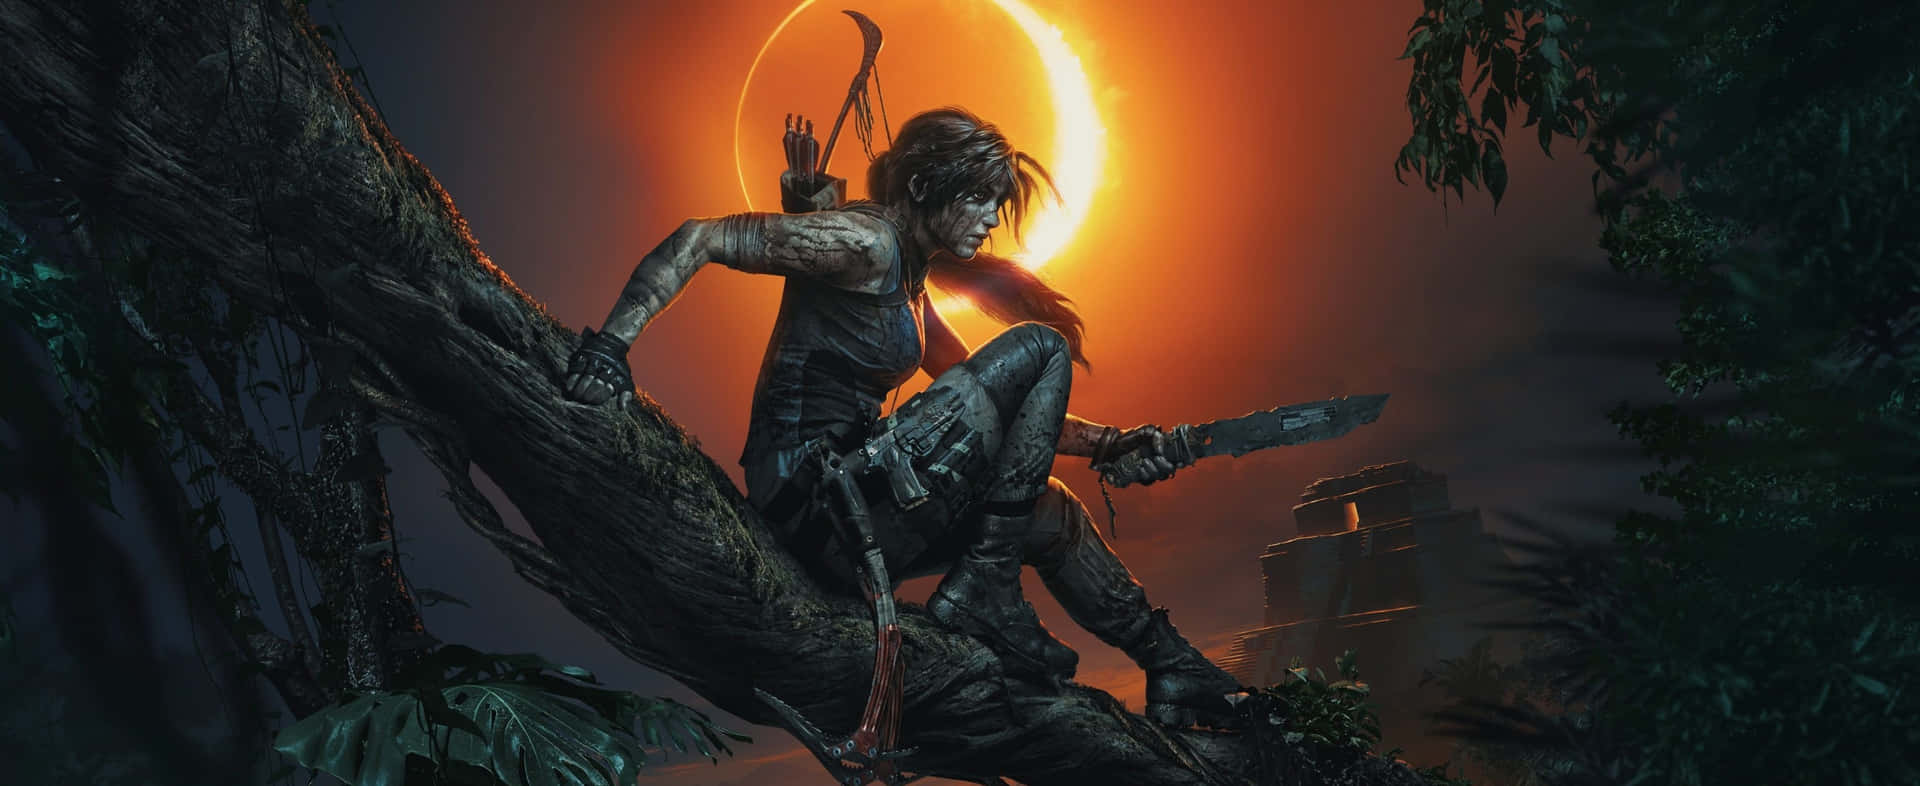 Shadowof The Tomb Raider Im Ultra-wide Gaming Wallpaper